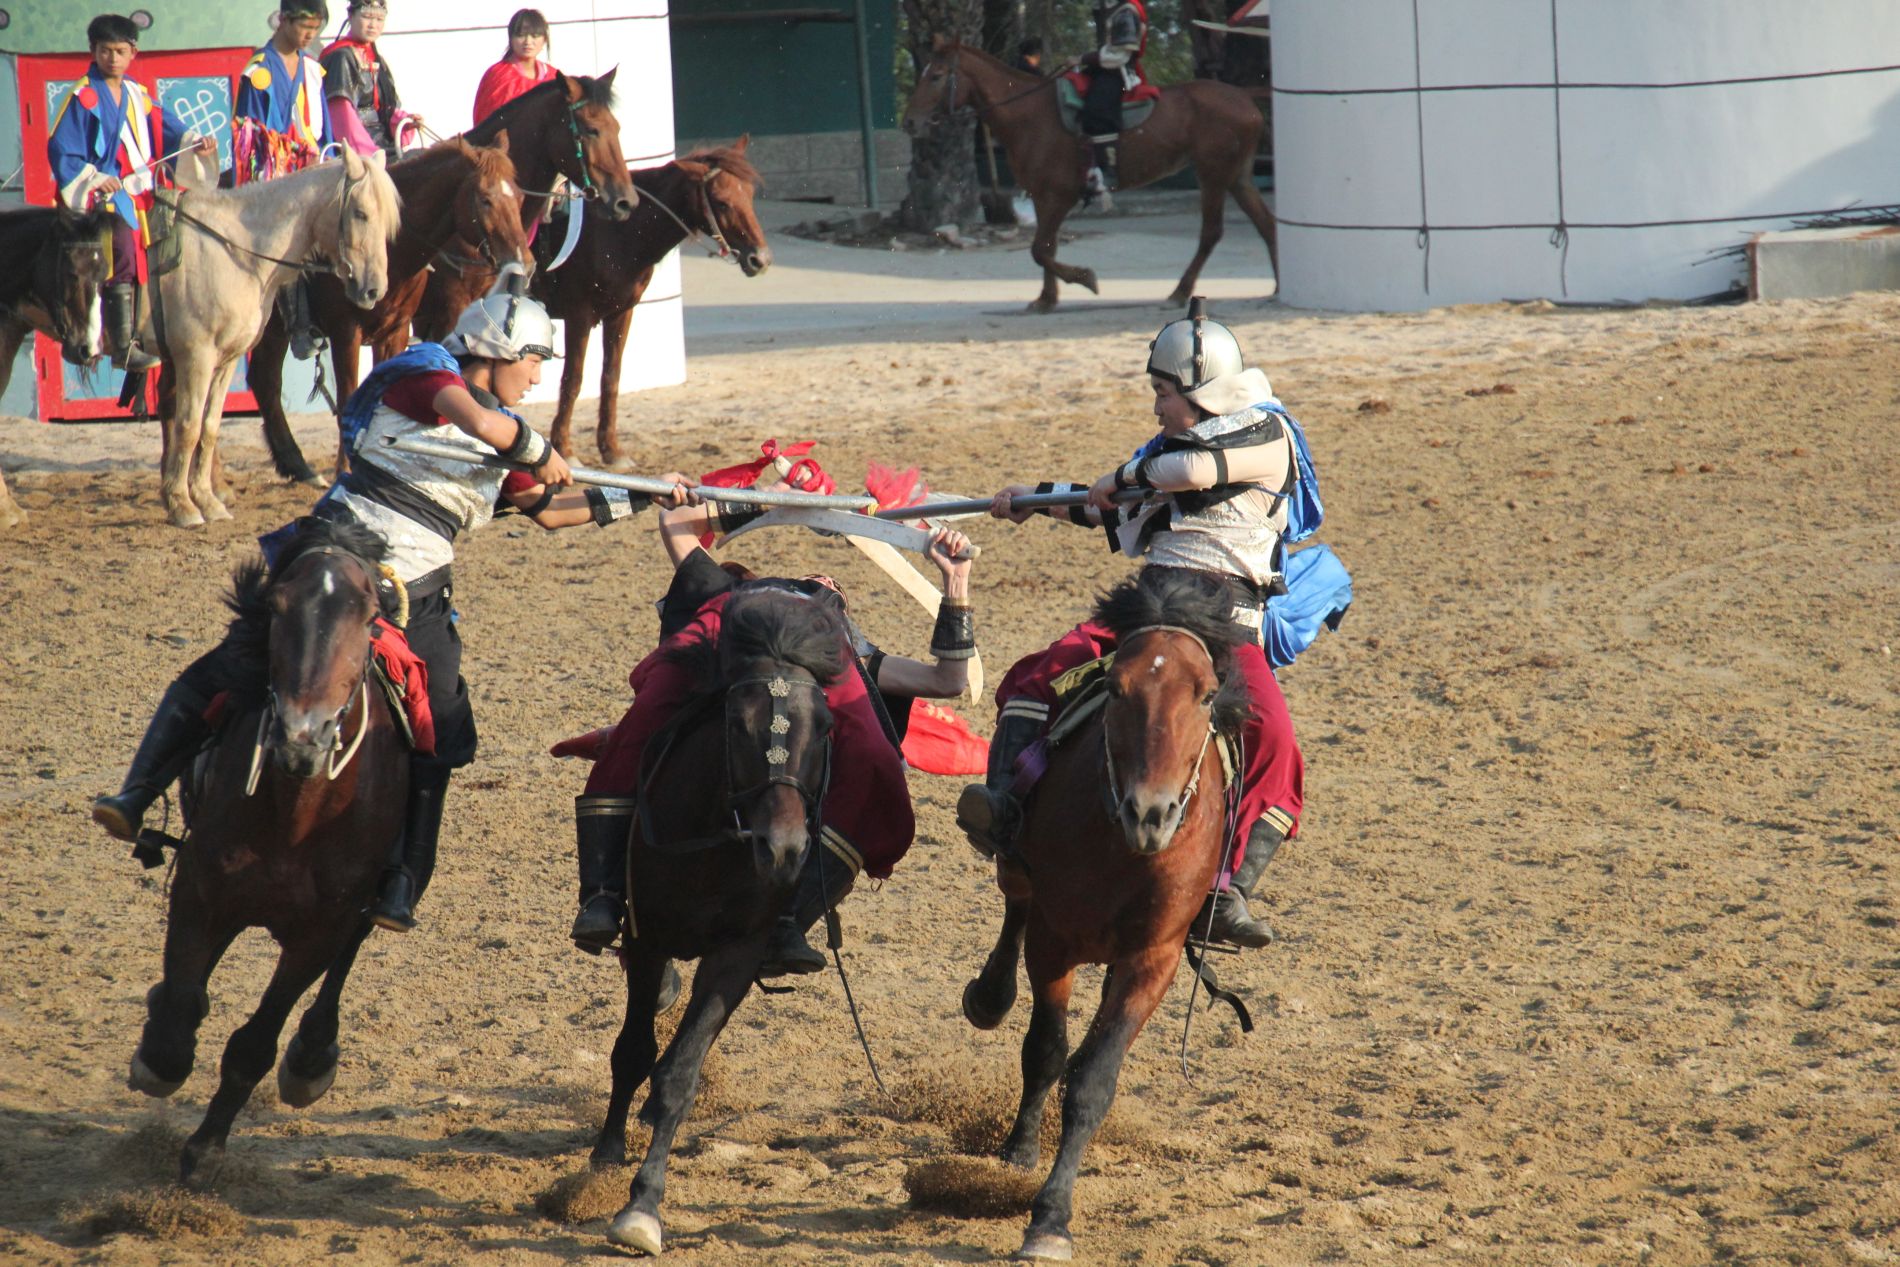 Actors perform a reenactment of a Genghis Khan horseback battle at Splendid China in Shenzhen.